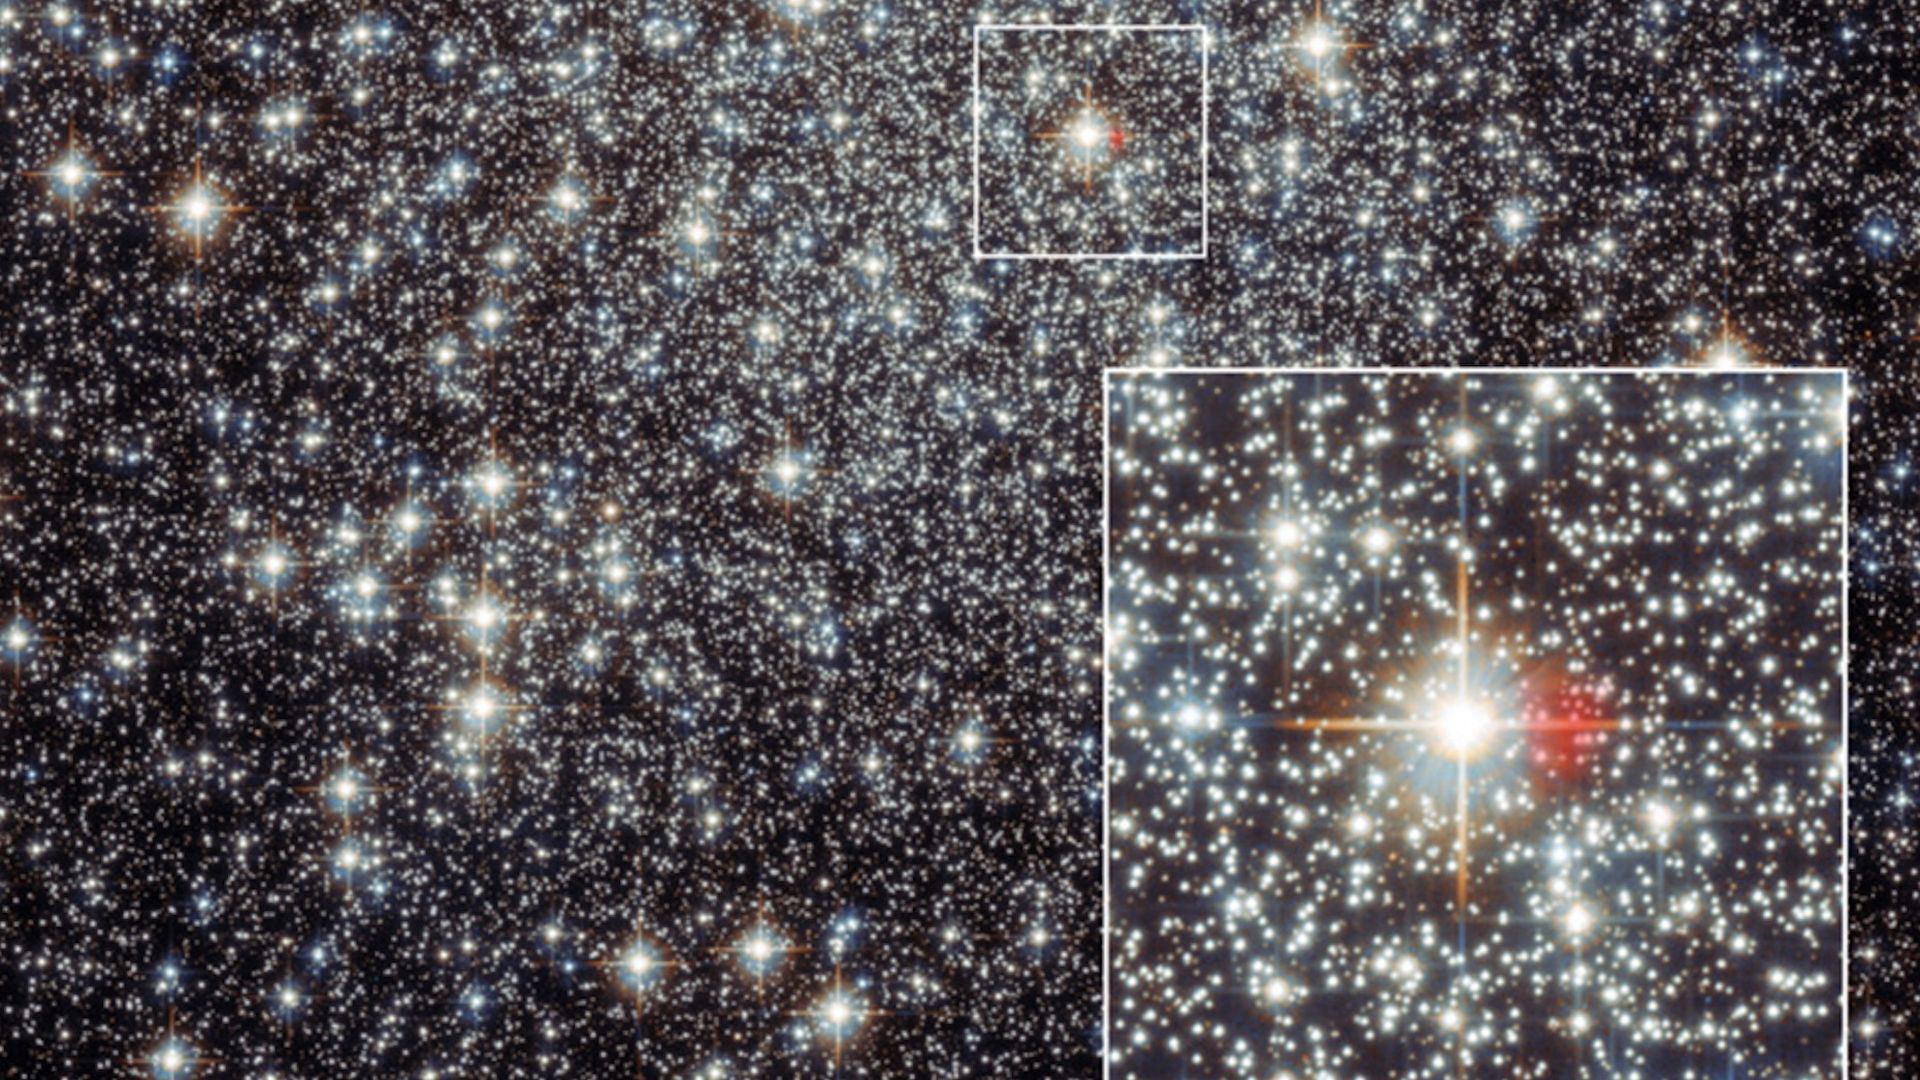 A close shot of the nova seen in the globular cluster.